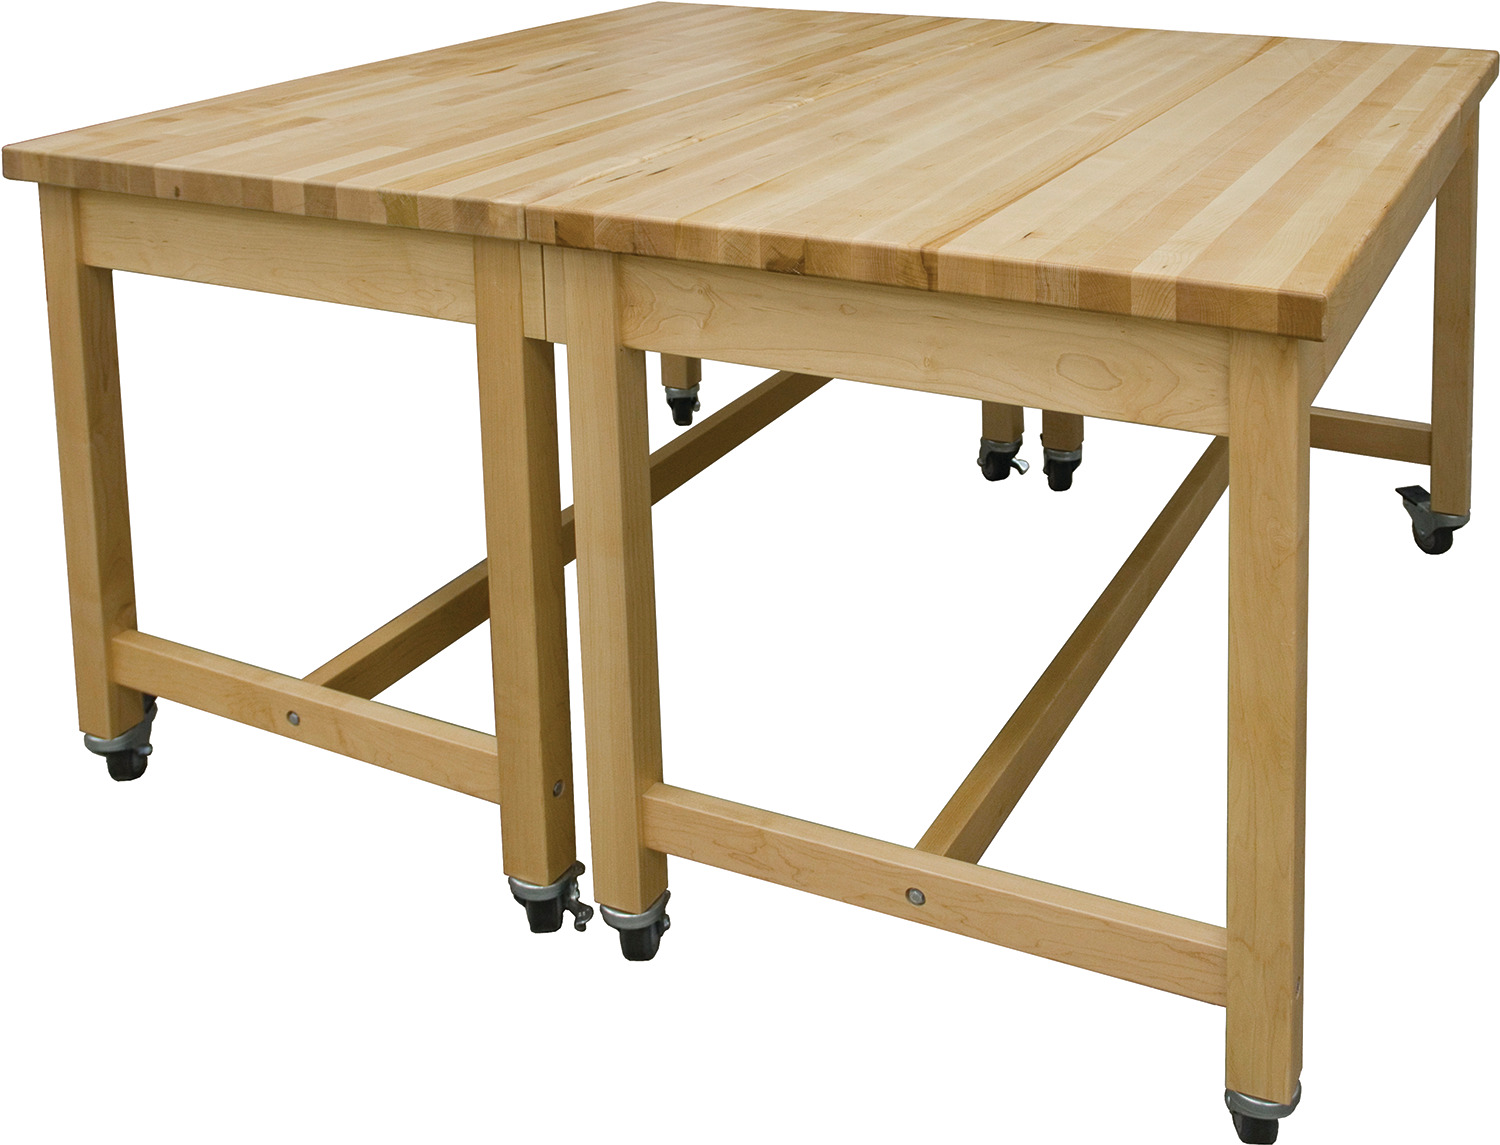 Hardwood Tables